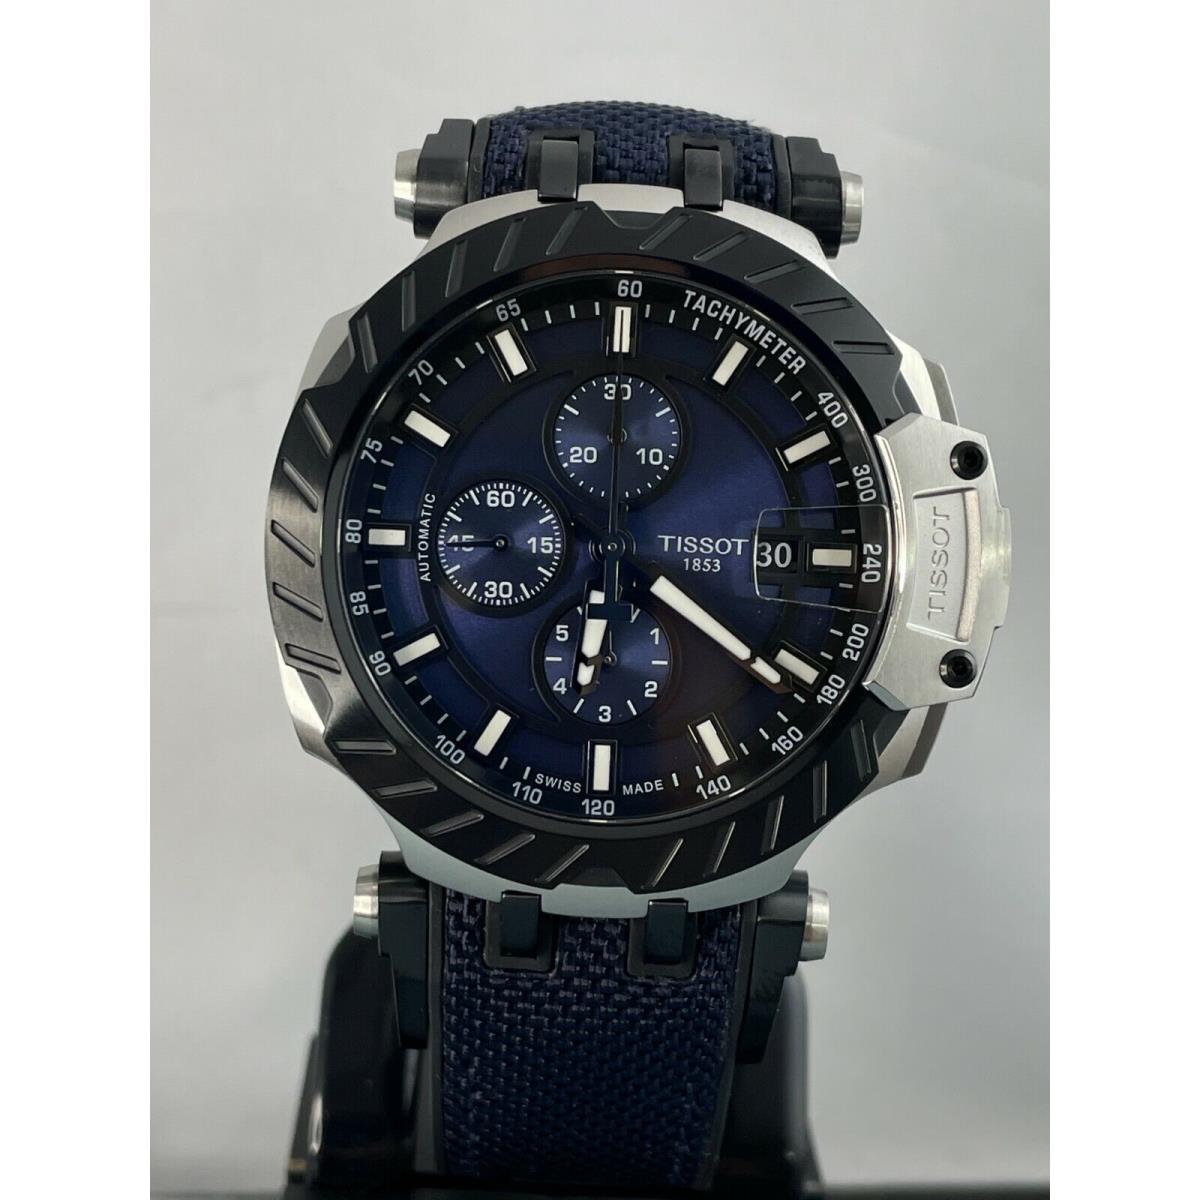 Tissot watch  - Blue Dial, Black/Blue Band 2